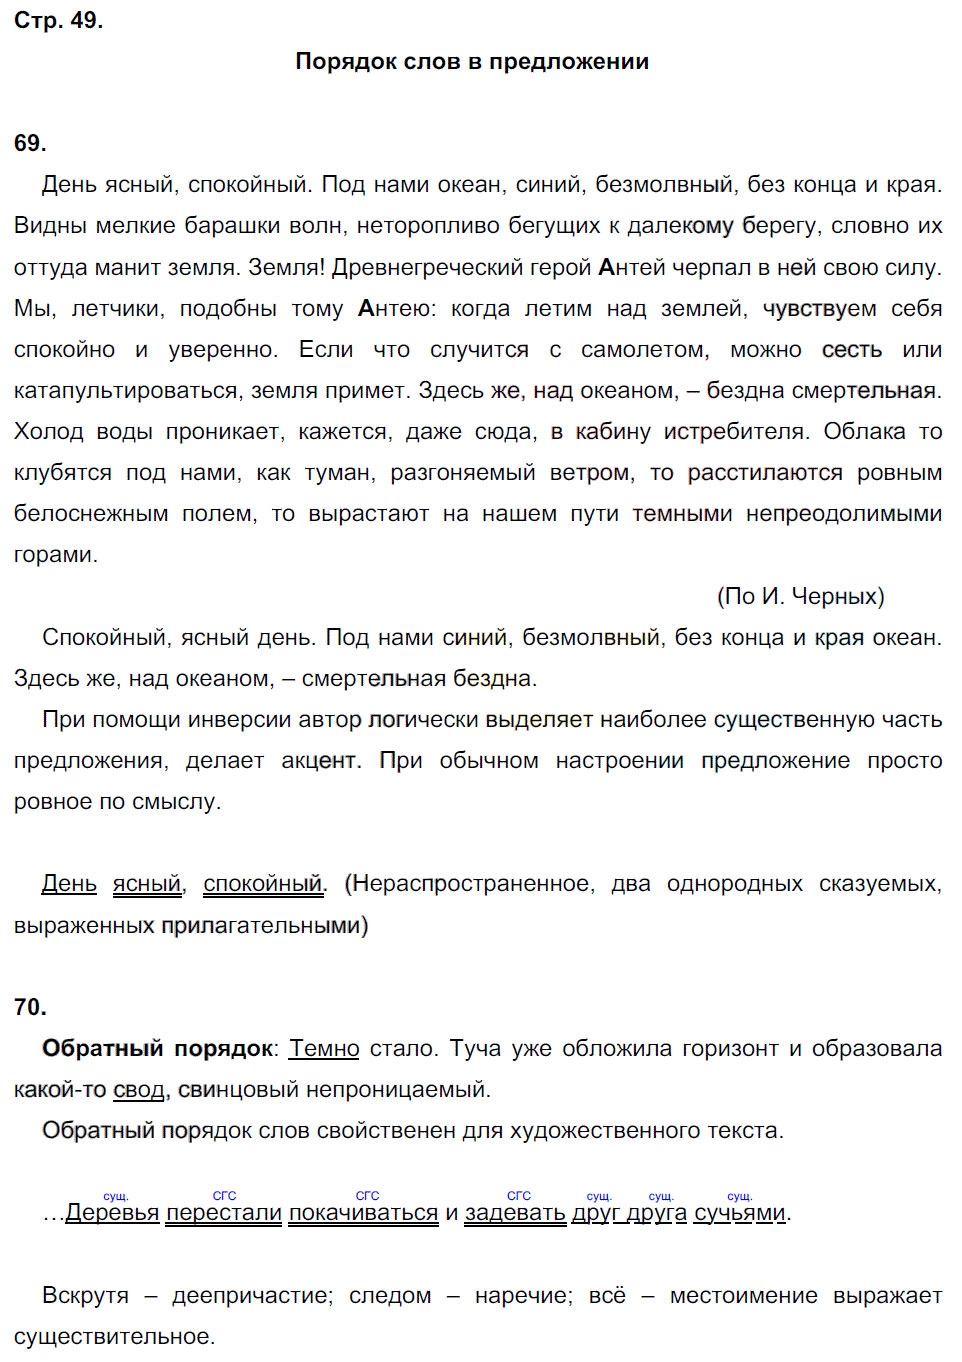 гдз 8 класс рабочая тетрадь страница 49 русский язык Кулаева